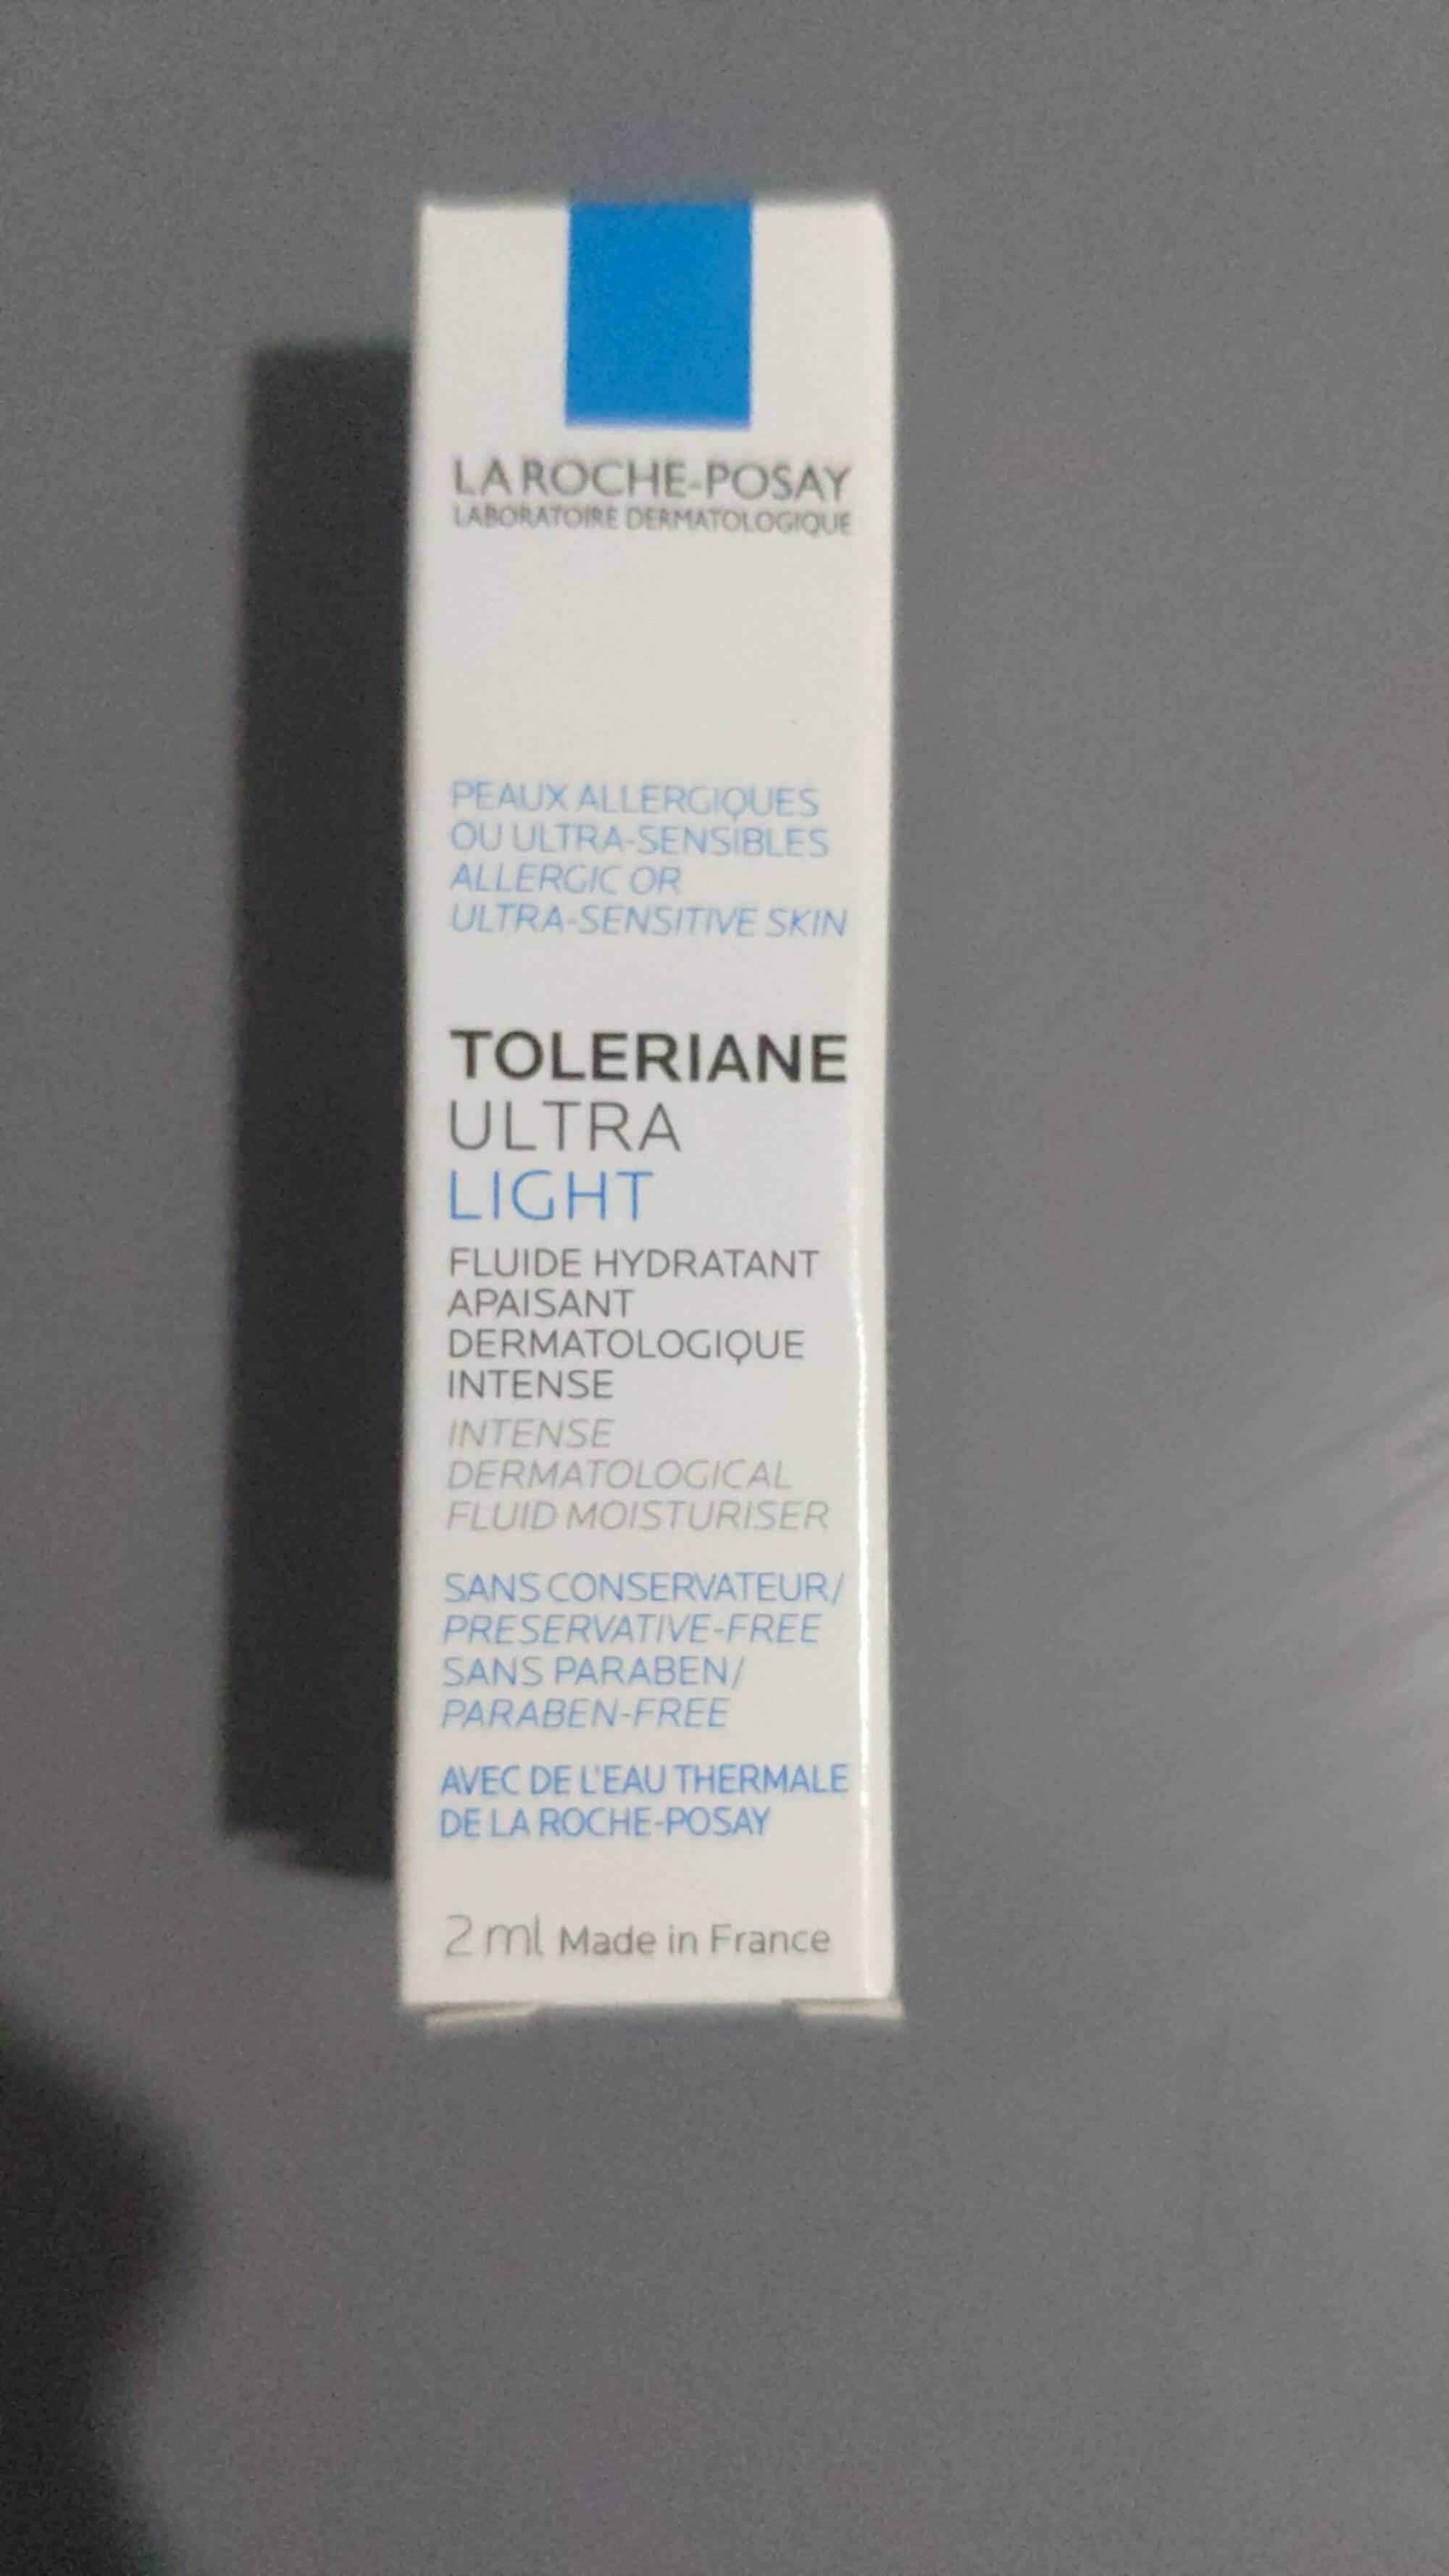 LA ROCHE-POSAY - Toleriane ultra light - Fluide hydratant apaisant dermatologique intense